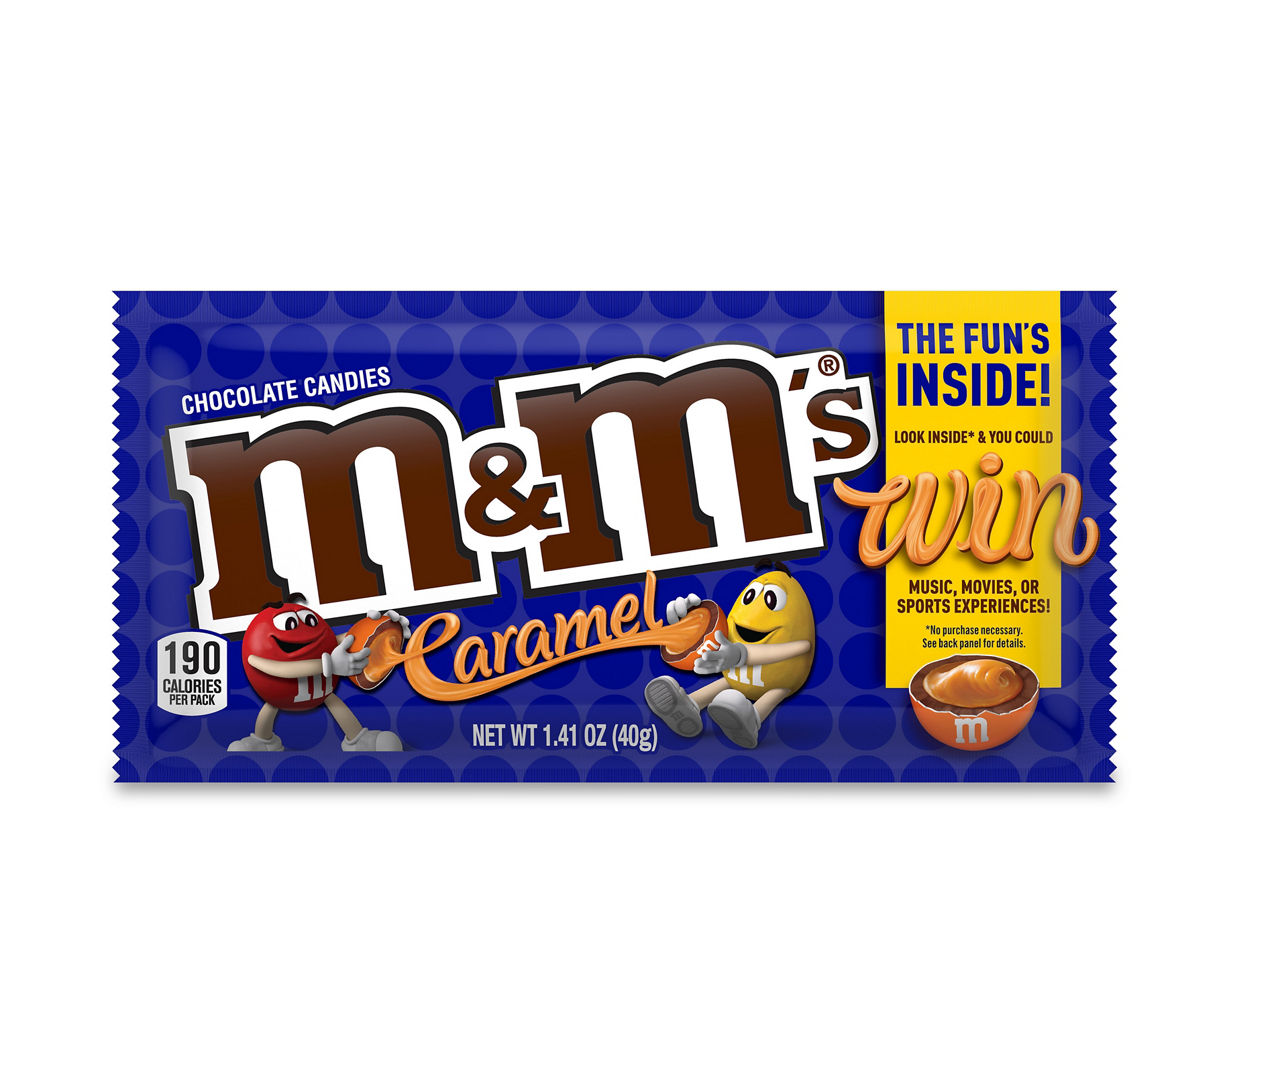 M&M's - Caramel Milk Chocolate Candies, Sharing Bag